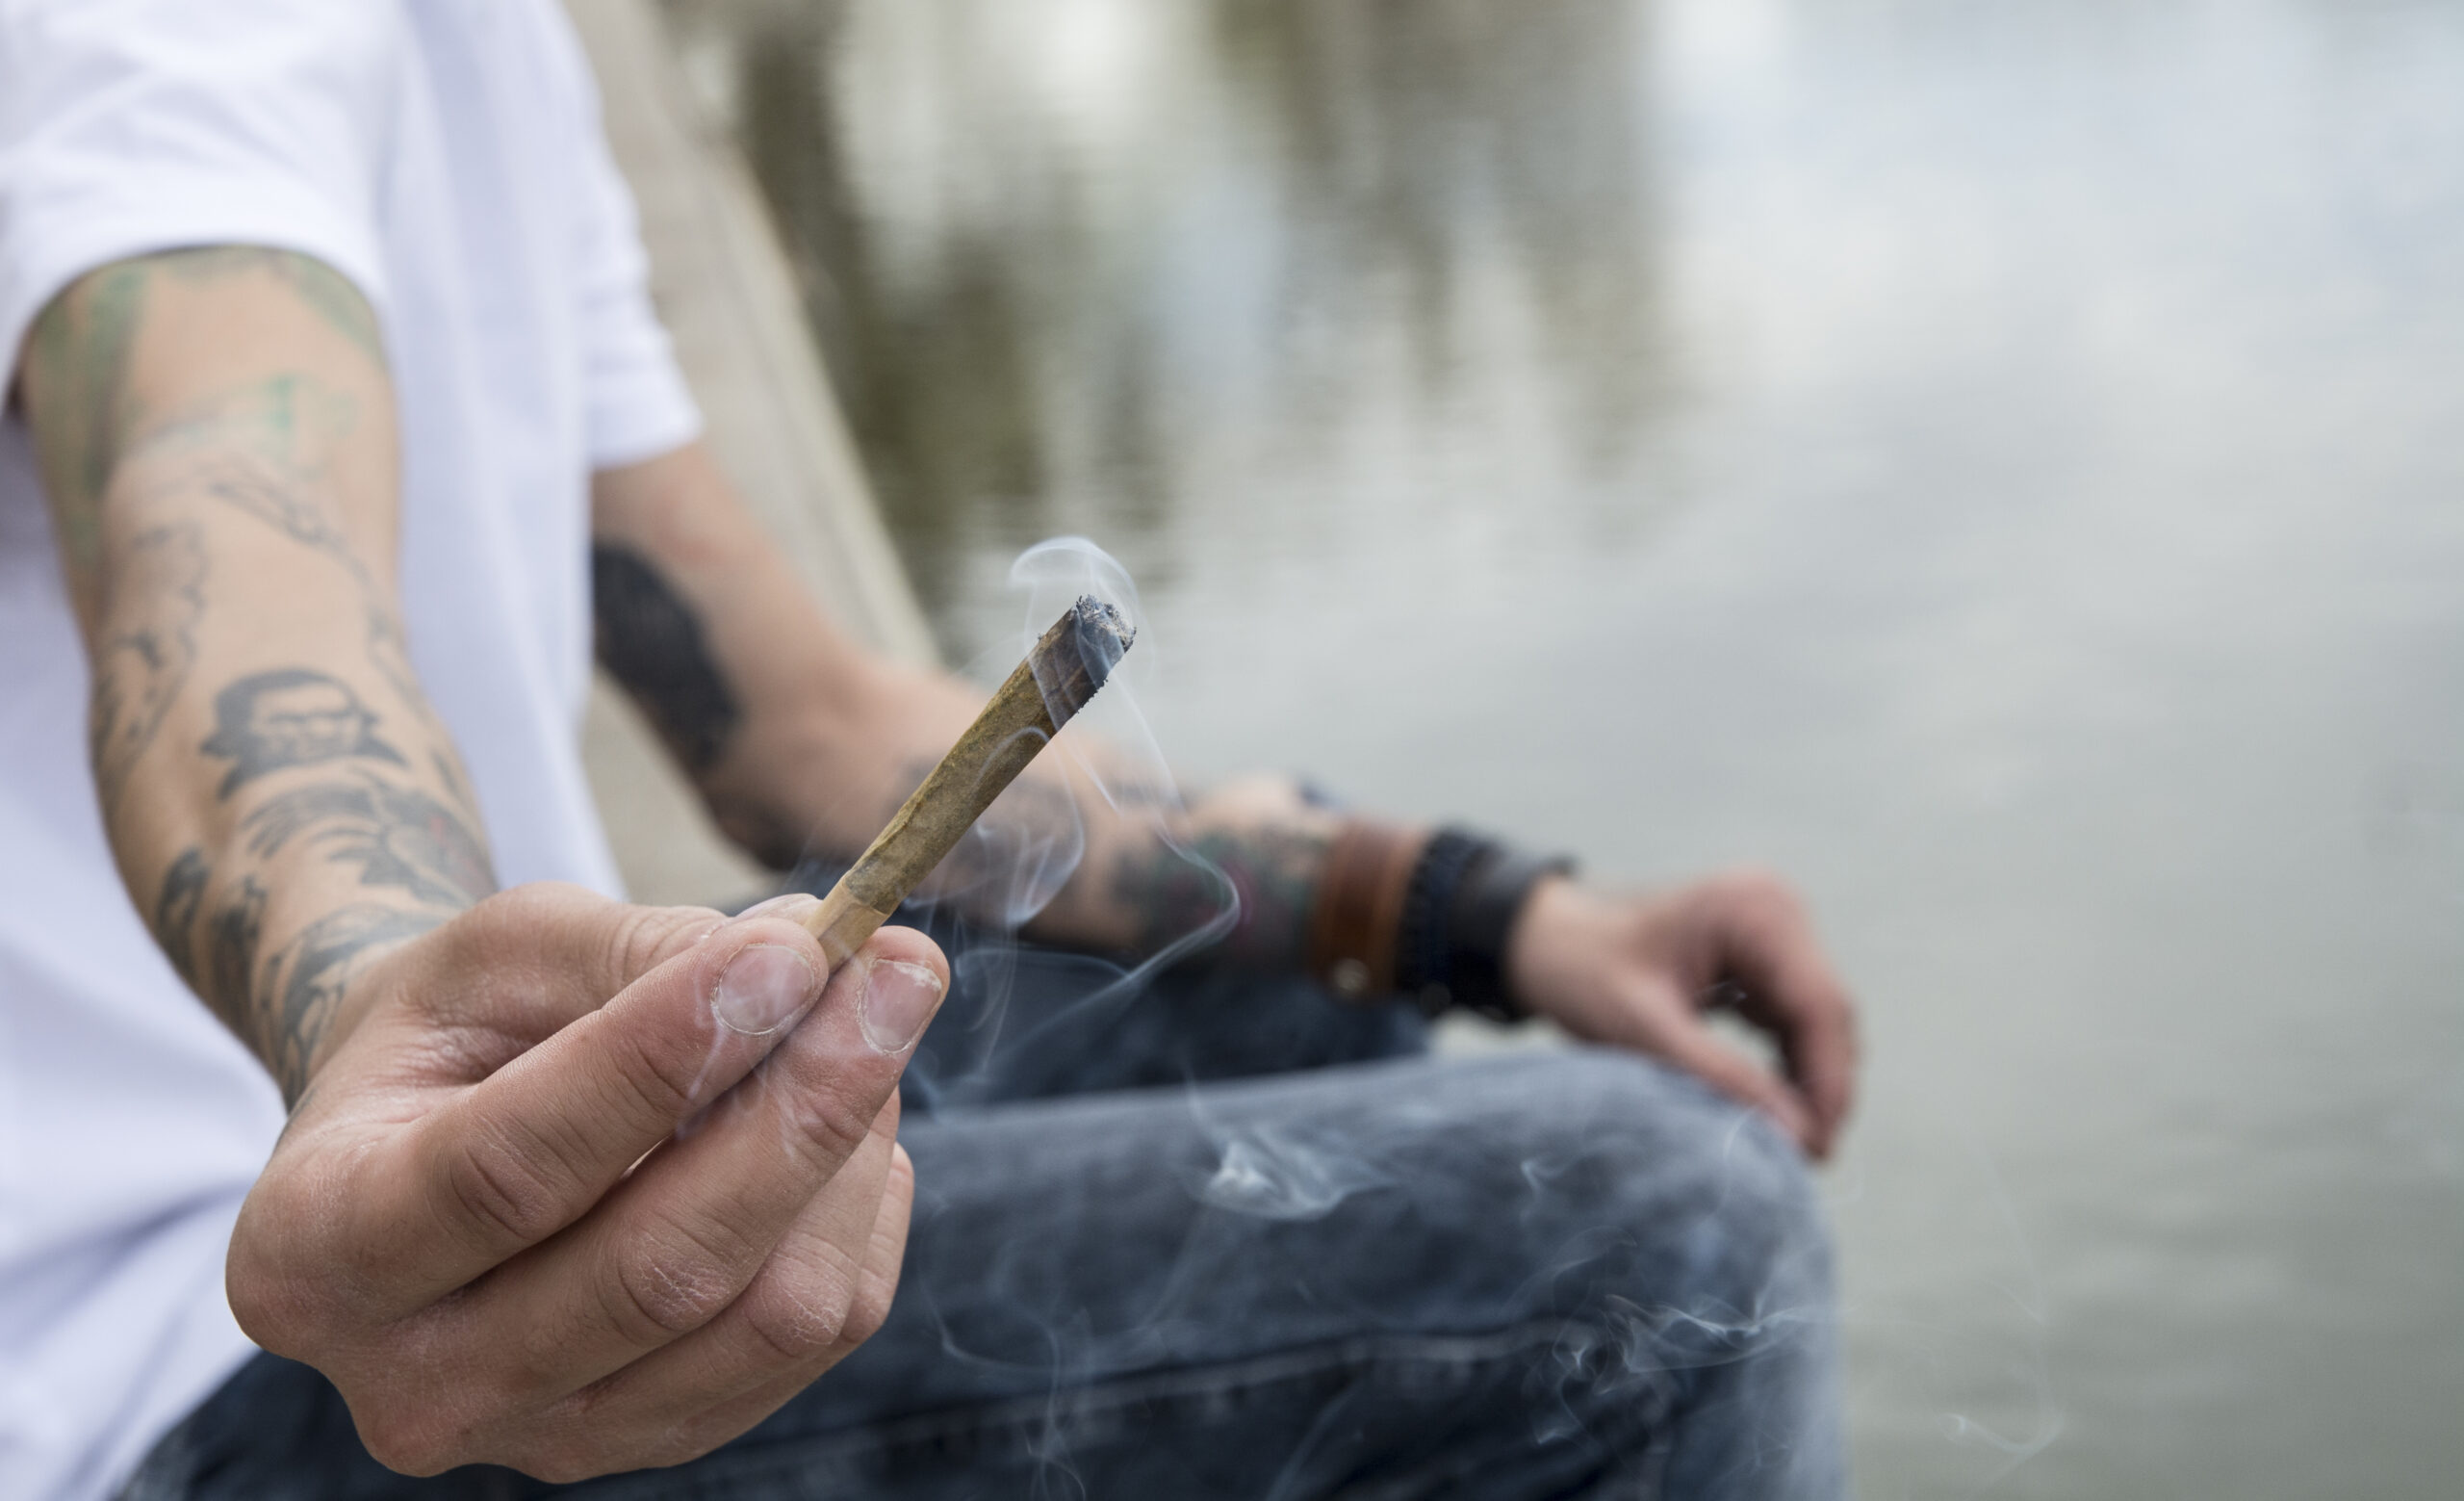 Legal Marijuana Cannabis Joints For Recreational Use